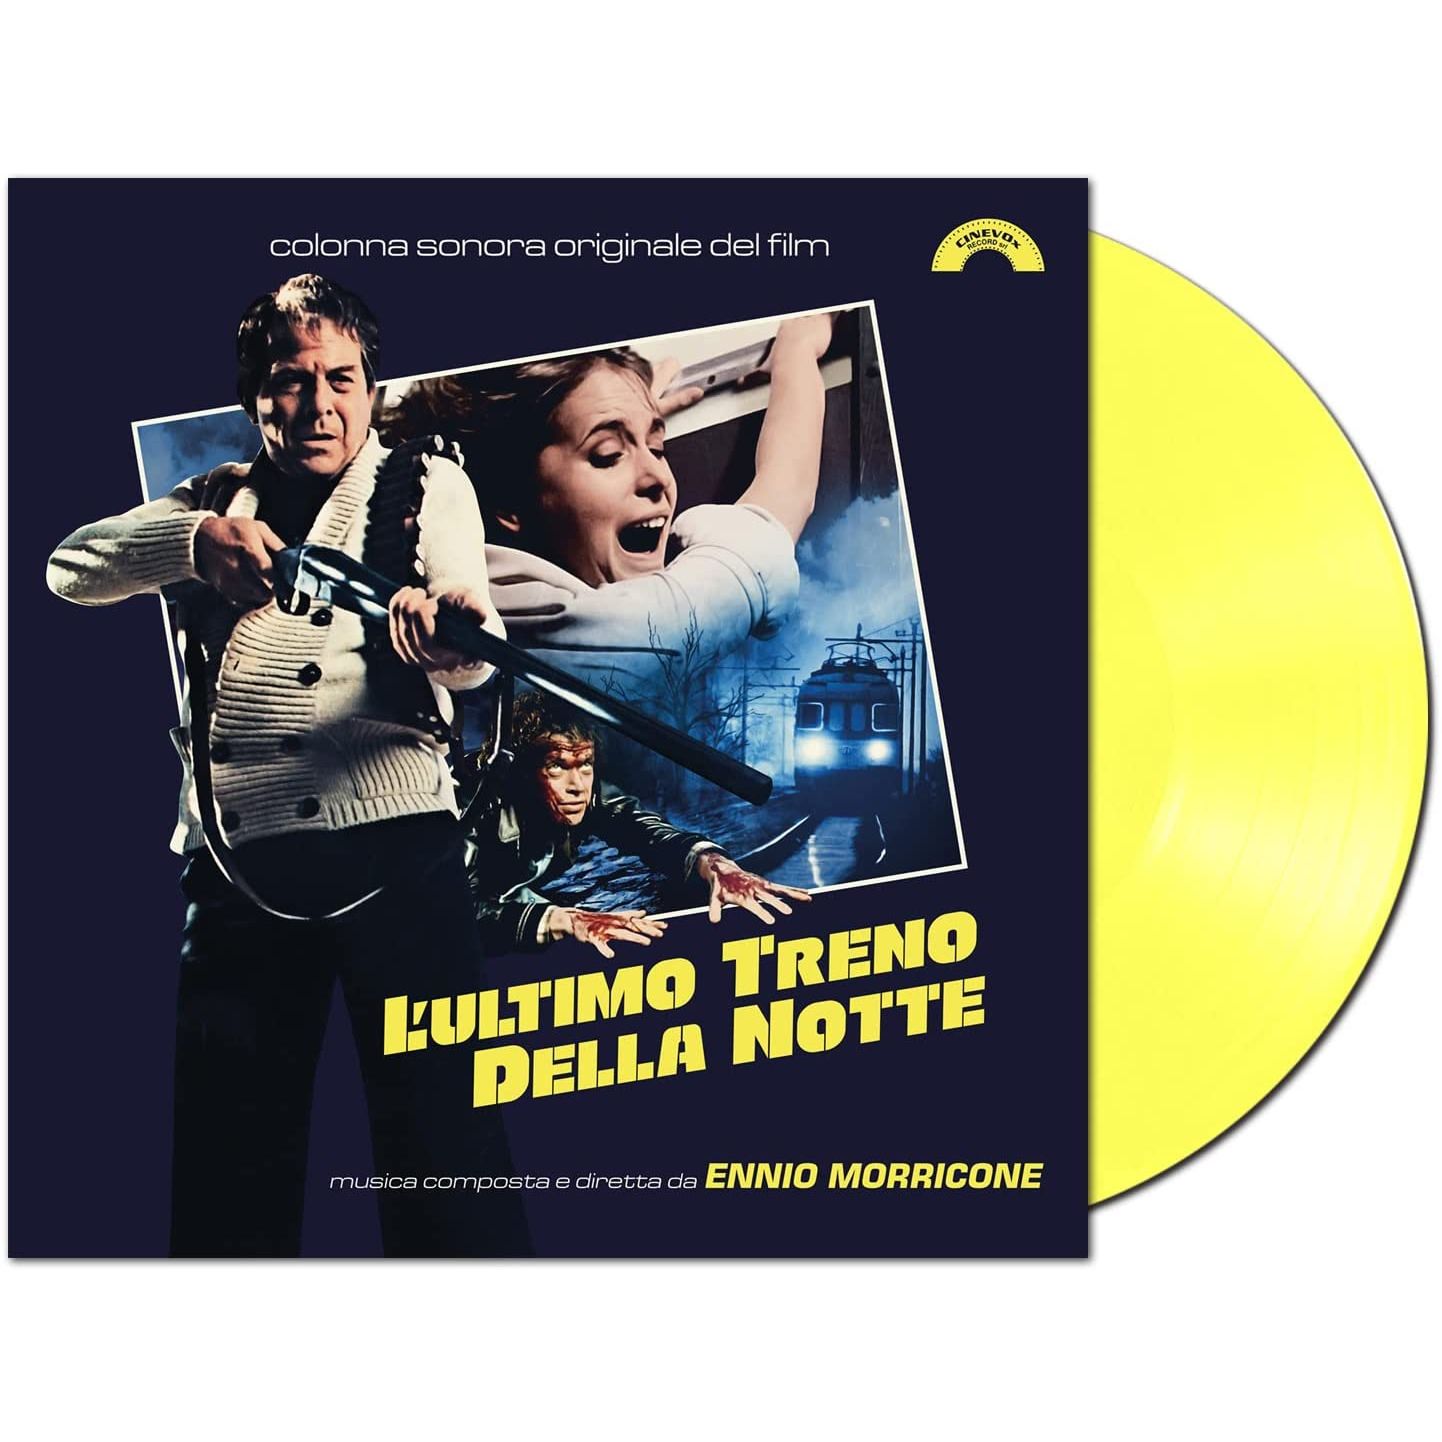 L'ULTIMO TRENO DELLA NOTTE - LP 180 GR. YELLOW VINYL GATEFOLD SLEEVE LTD. ED.